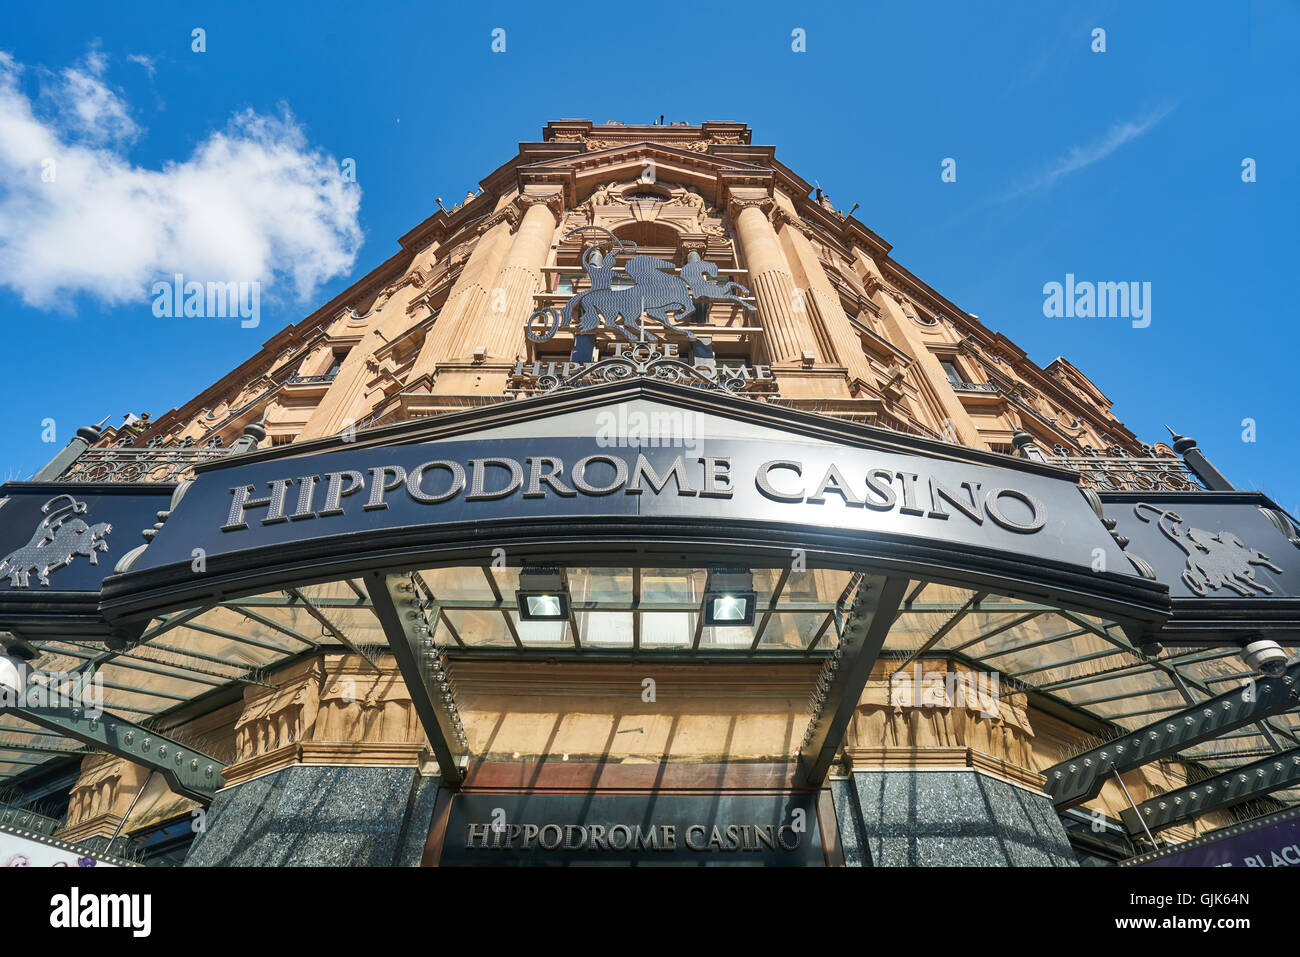 Hippodrome Casino, london Stock Photo